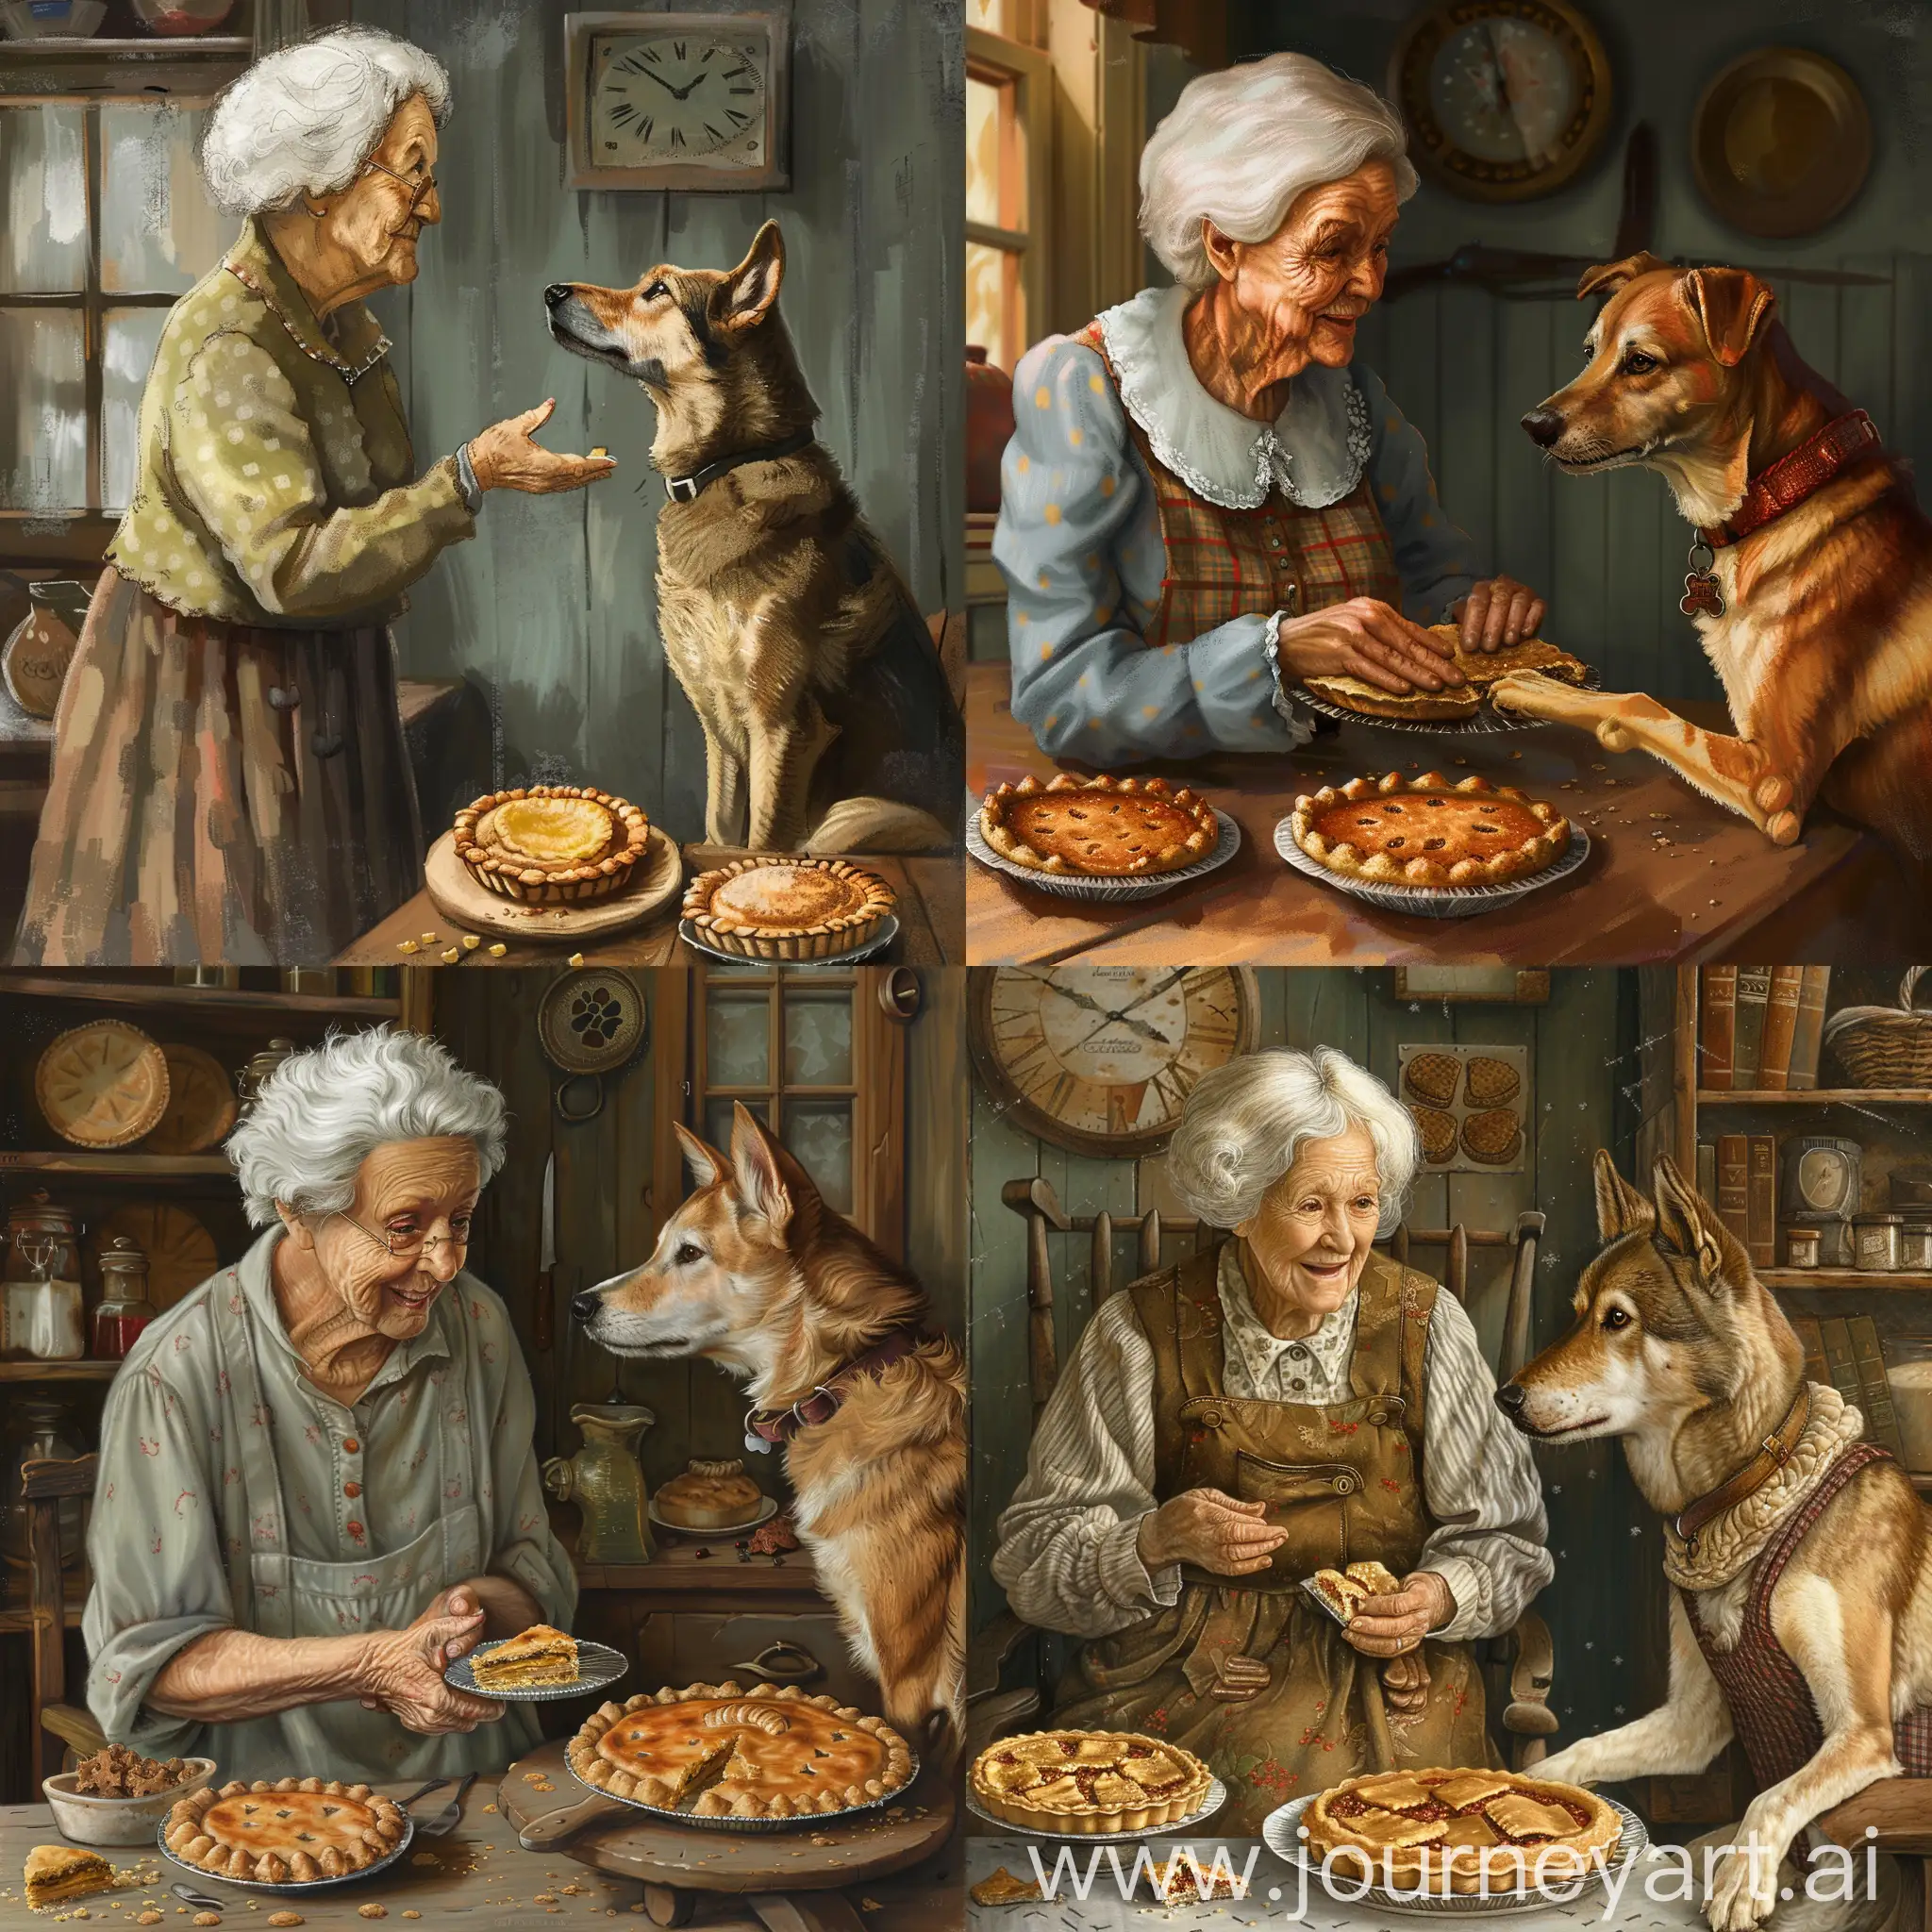 Grandma-Serving-Pies-to-Dog-Veteran-of-World-War-I